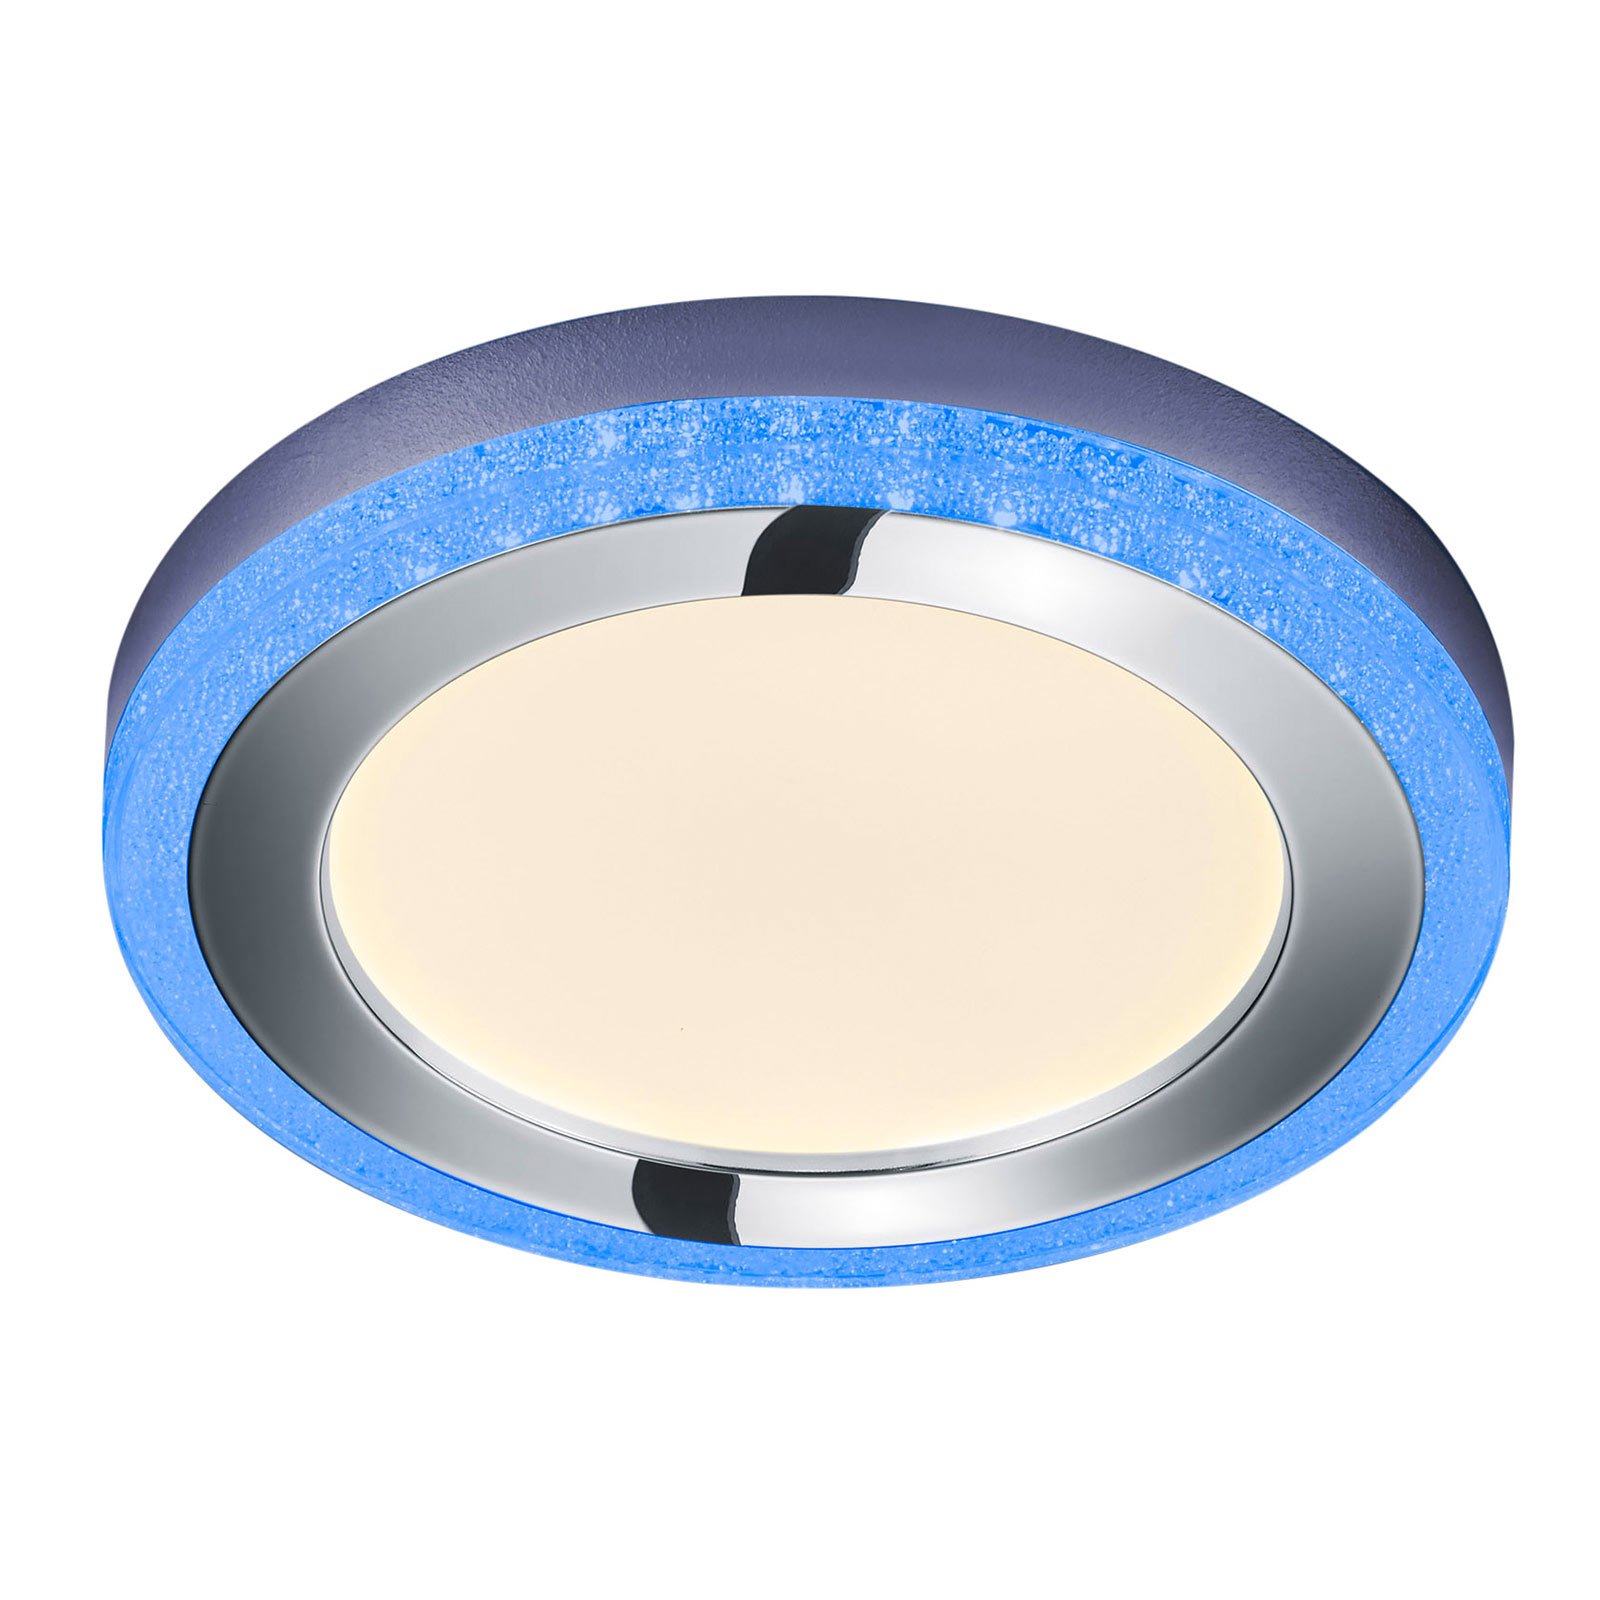 LED-taklampe Slide, hvit, rund, Ø 40 cm